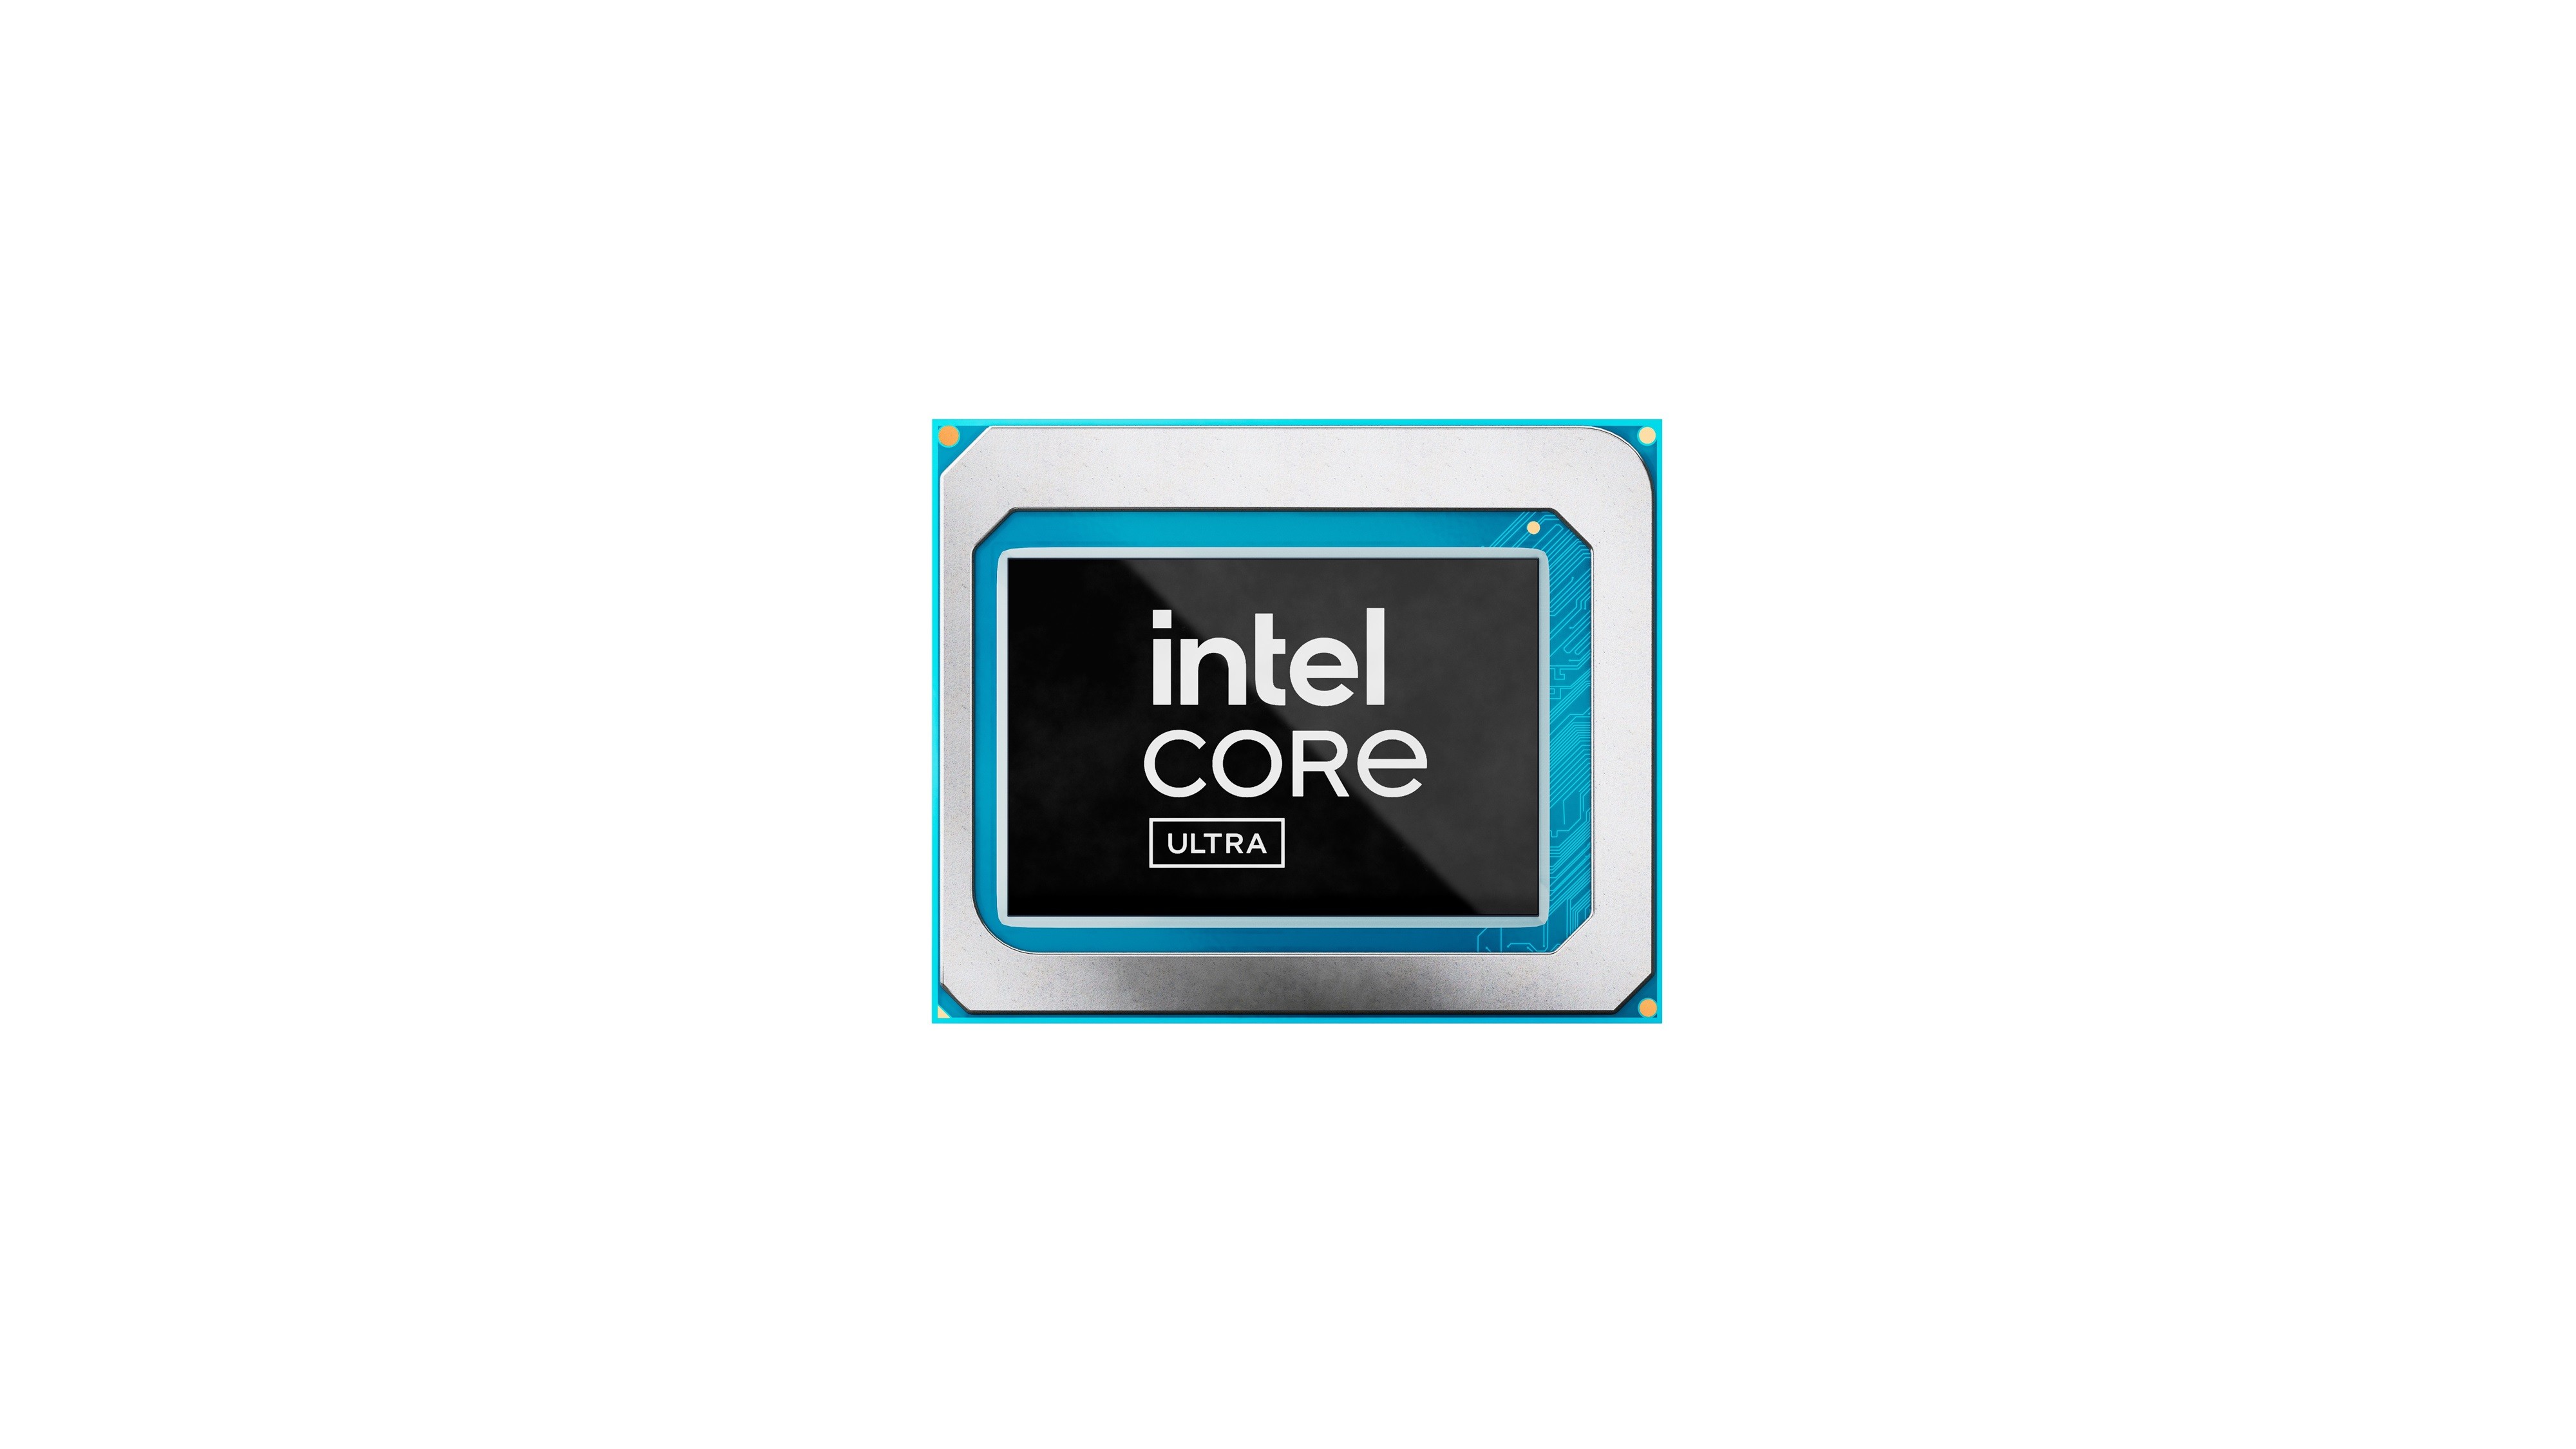 intel-core-ultra-4-1702602878.jpg